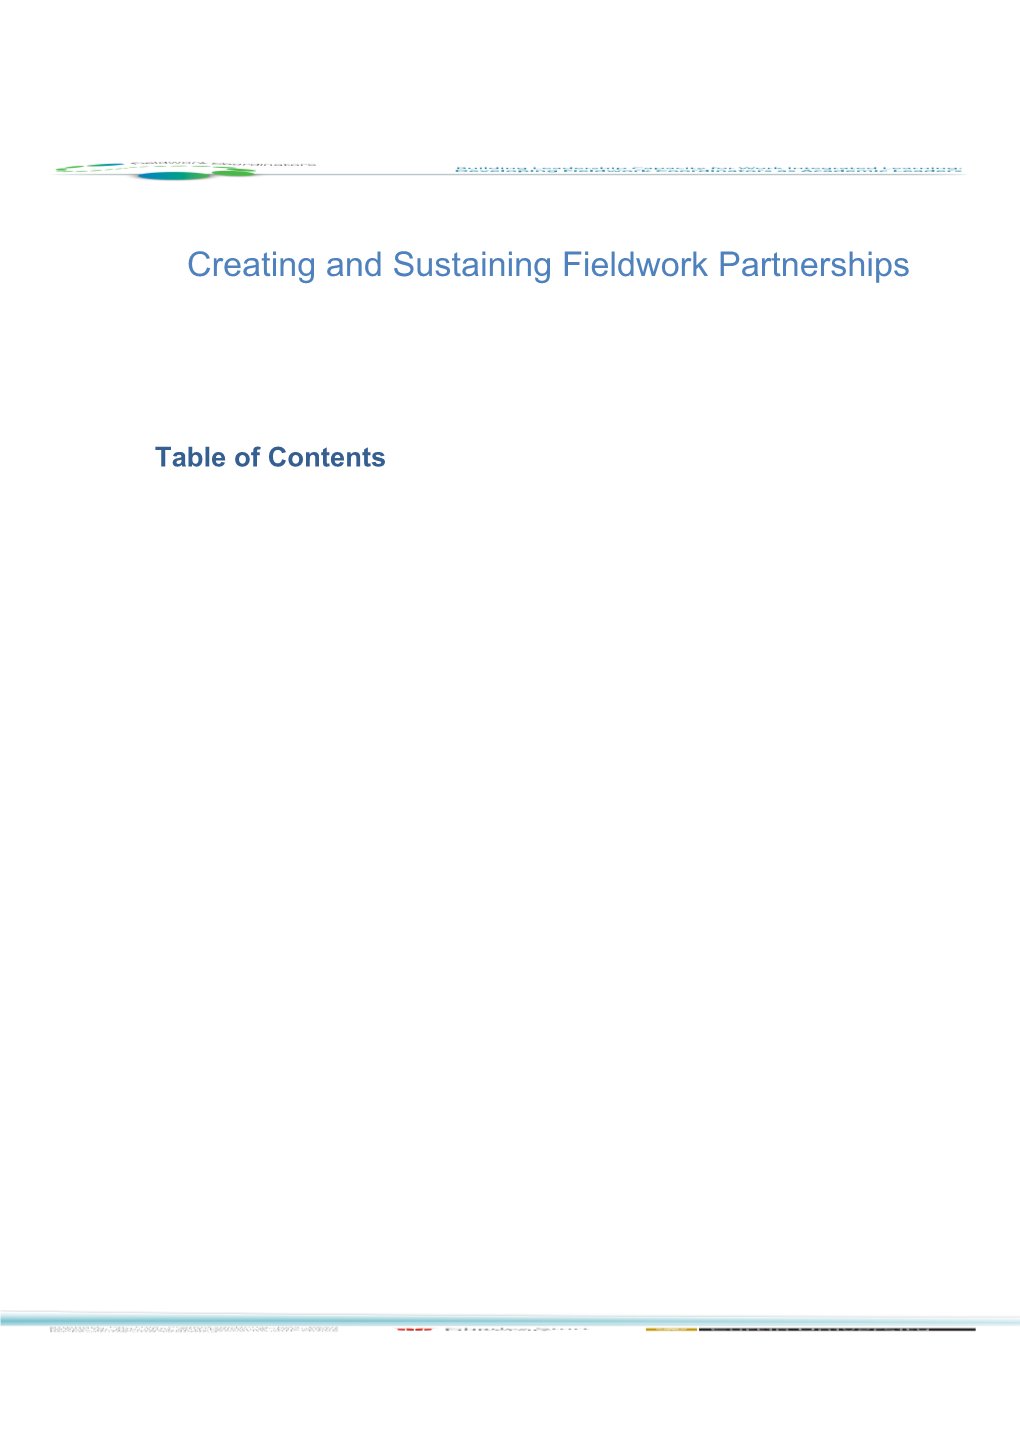 Creating and Sustaining Fieldwork Partnerships